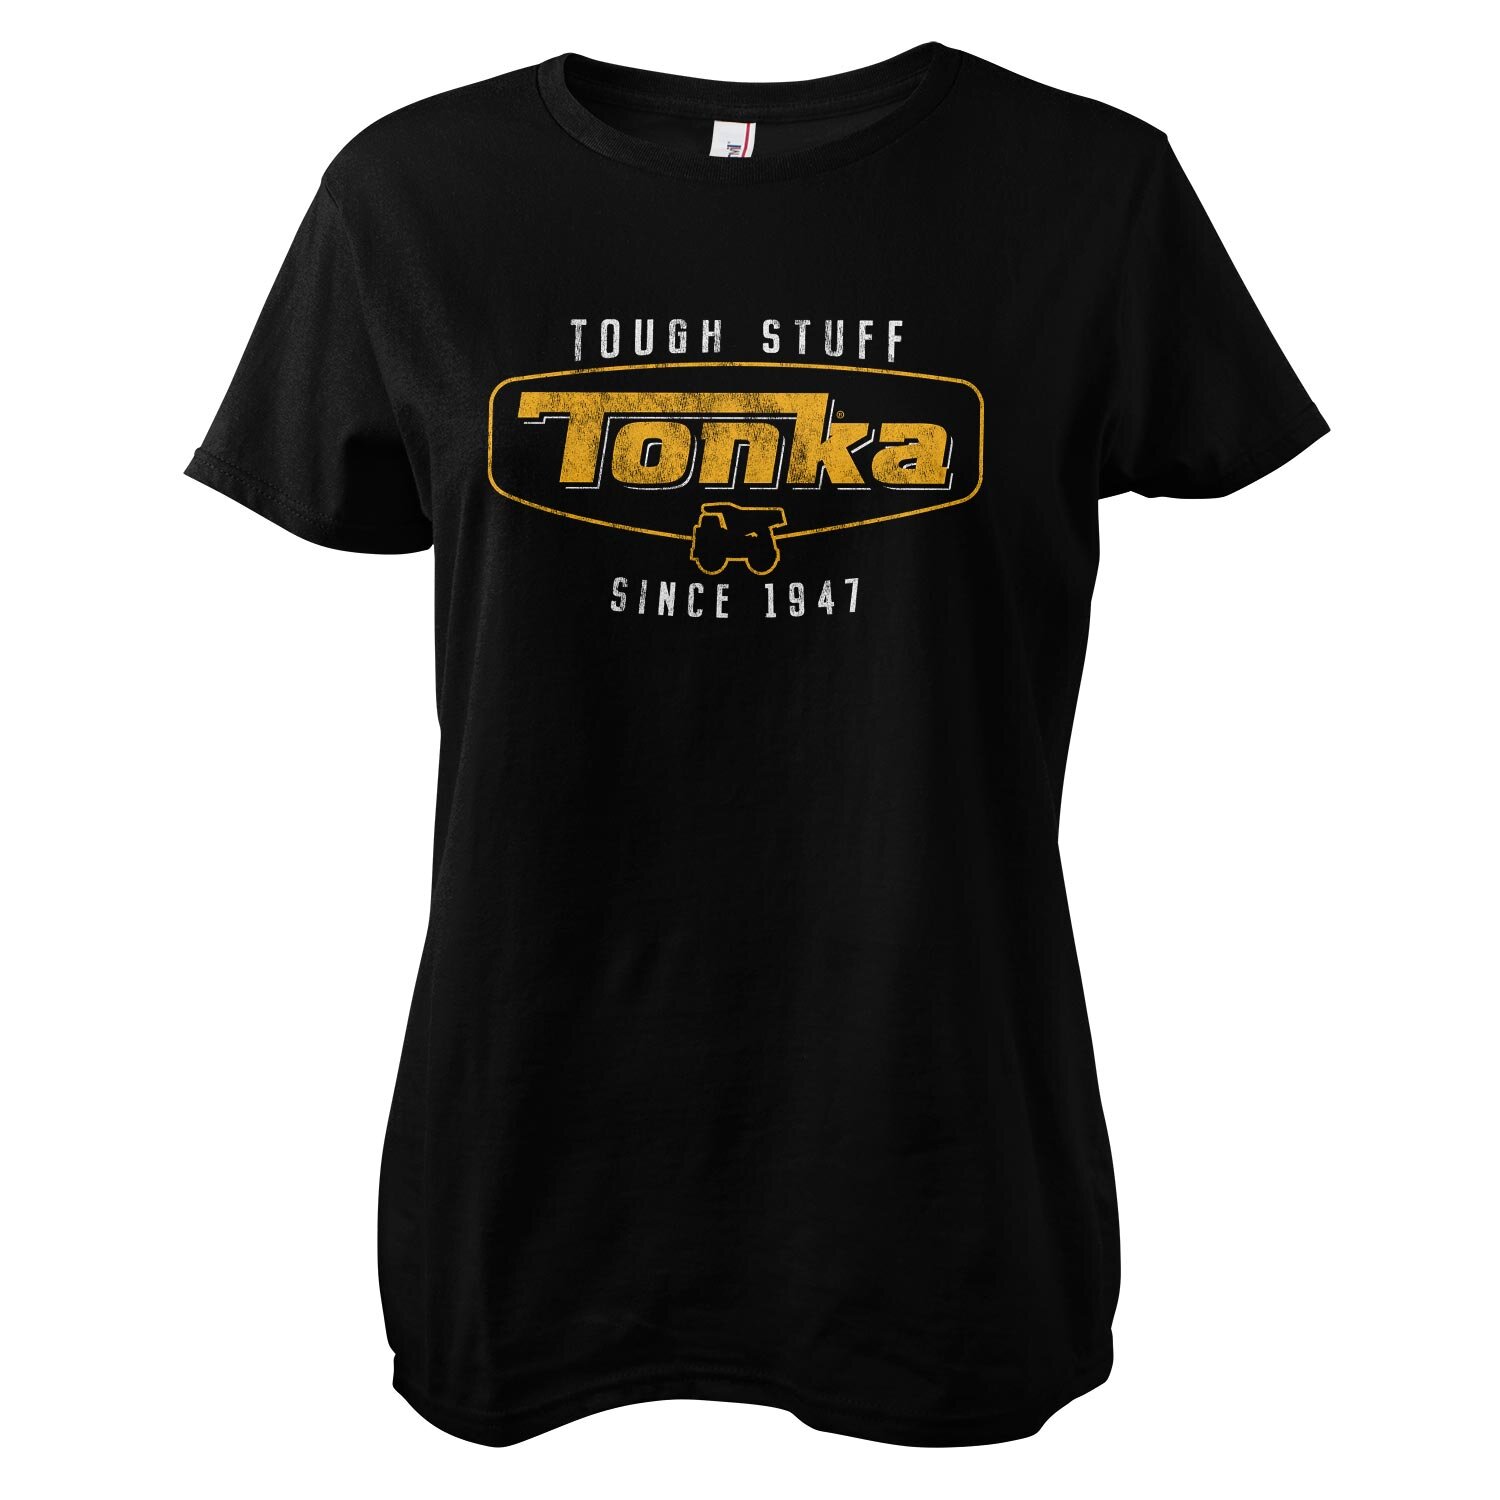 Tonka Tough Stuff Washed Girly Tee